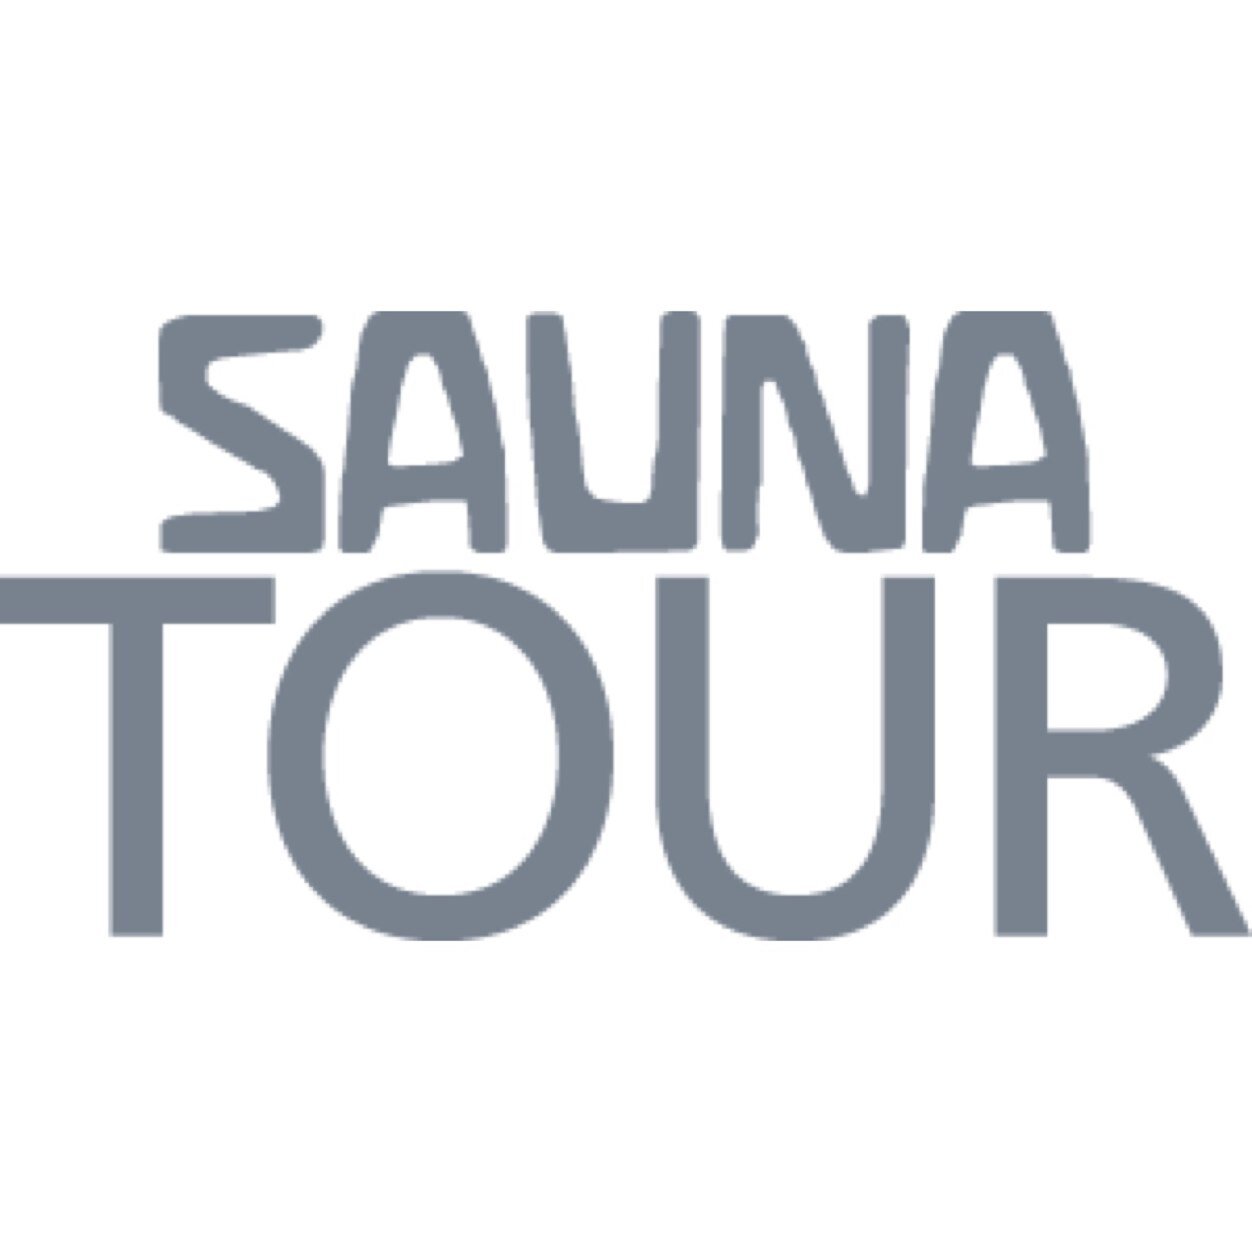 Authentic Finnish Sauna Experiences! Guided programmes by 7 local companies in Ruka-Kuusamo, Lapland. #Saunatour #WellbeingInWilderness